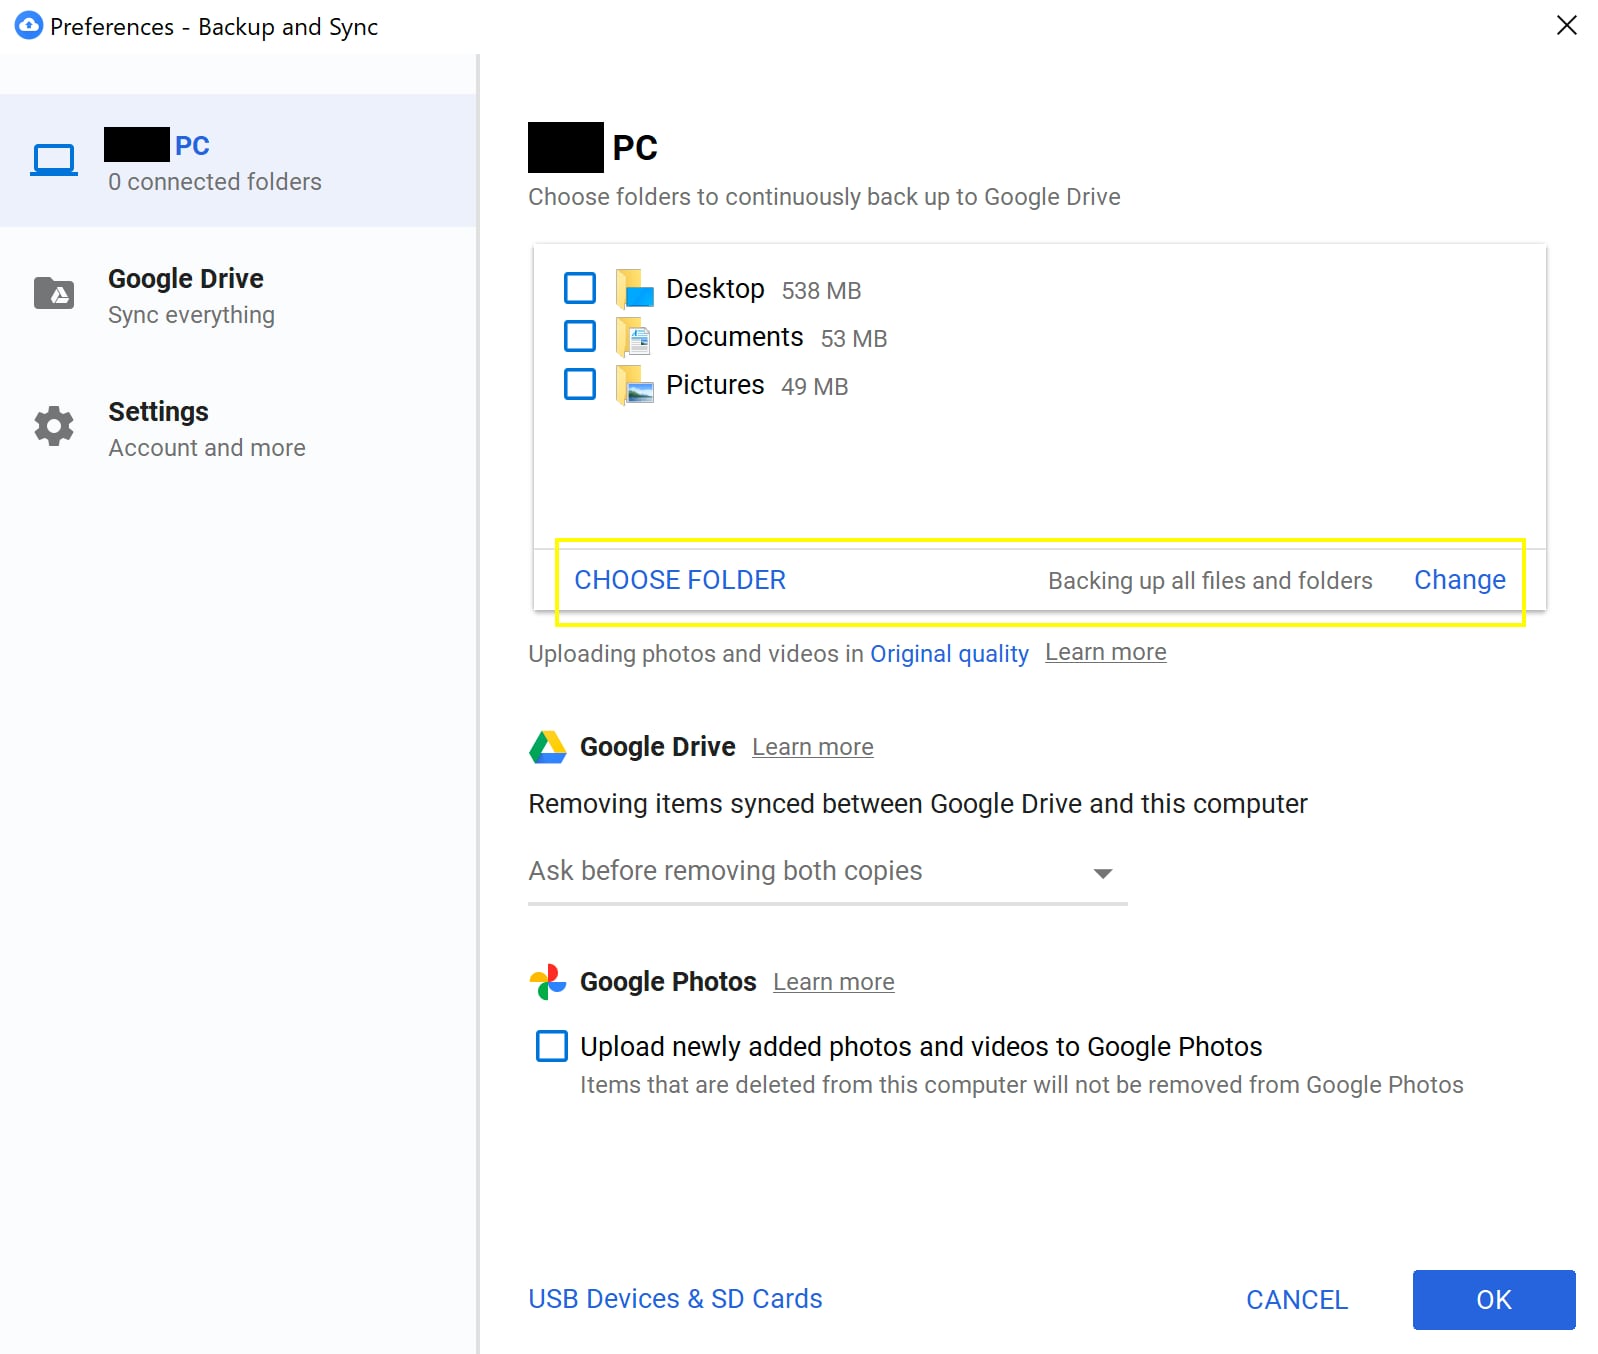 Google Drive Preferences Window